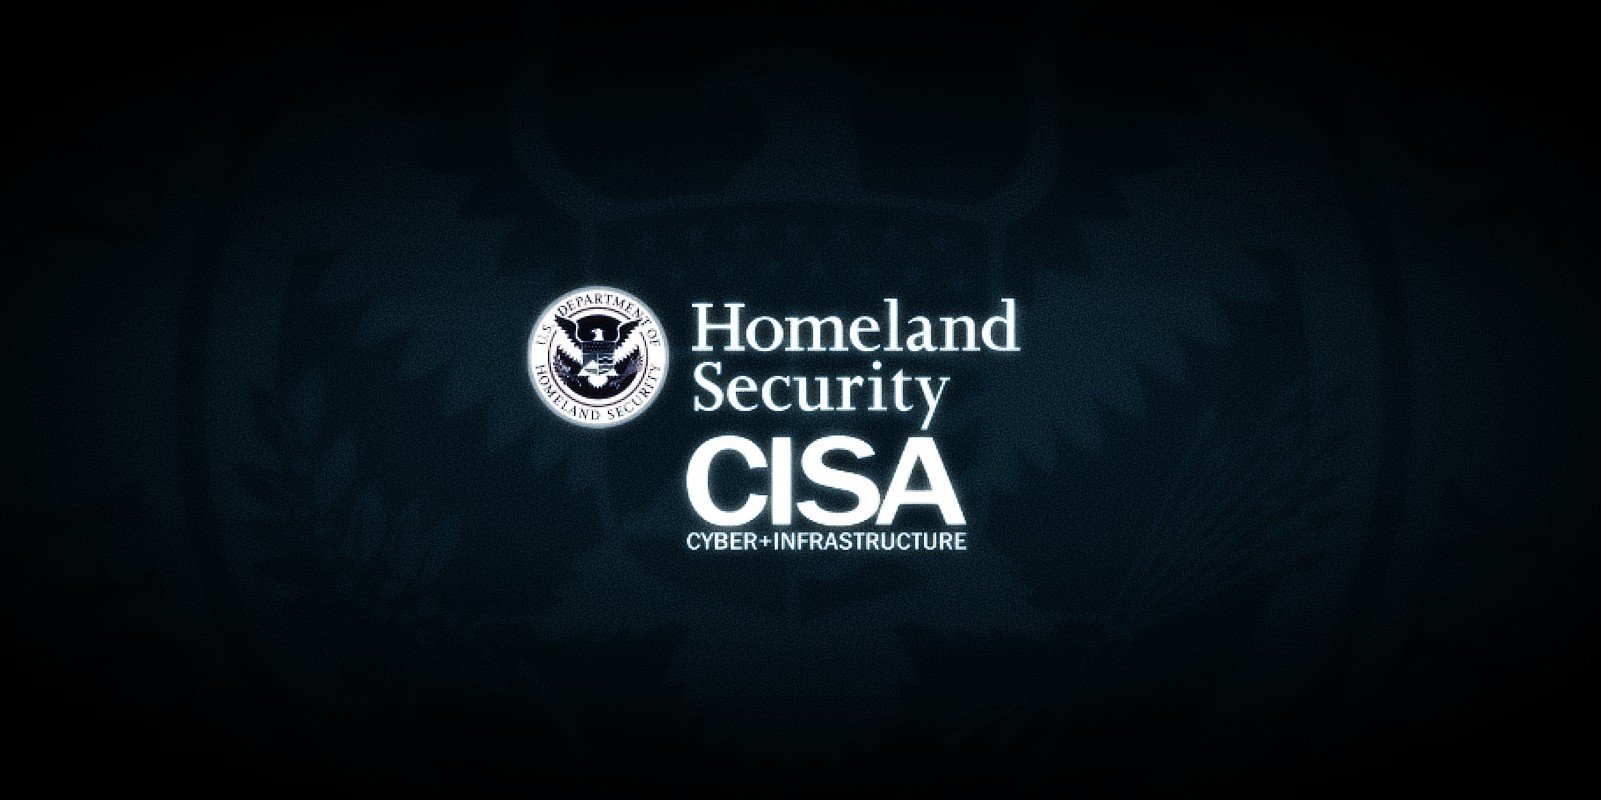 CISA: APT group behind US govt hacks used multiple access vectors